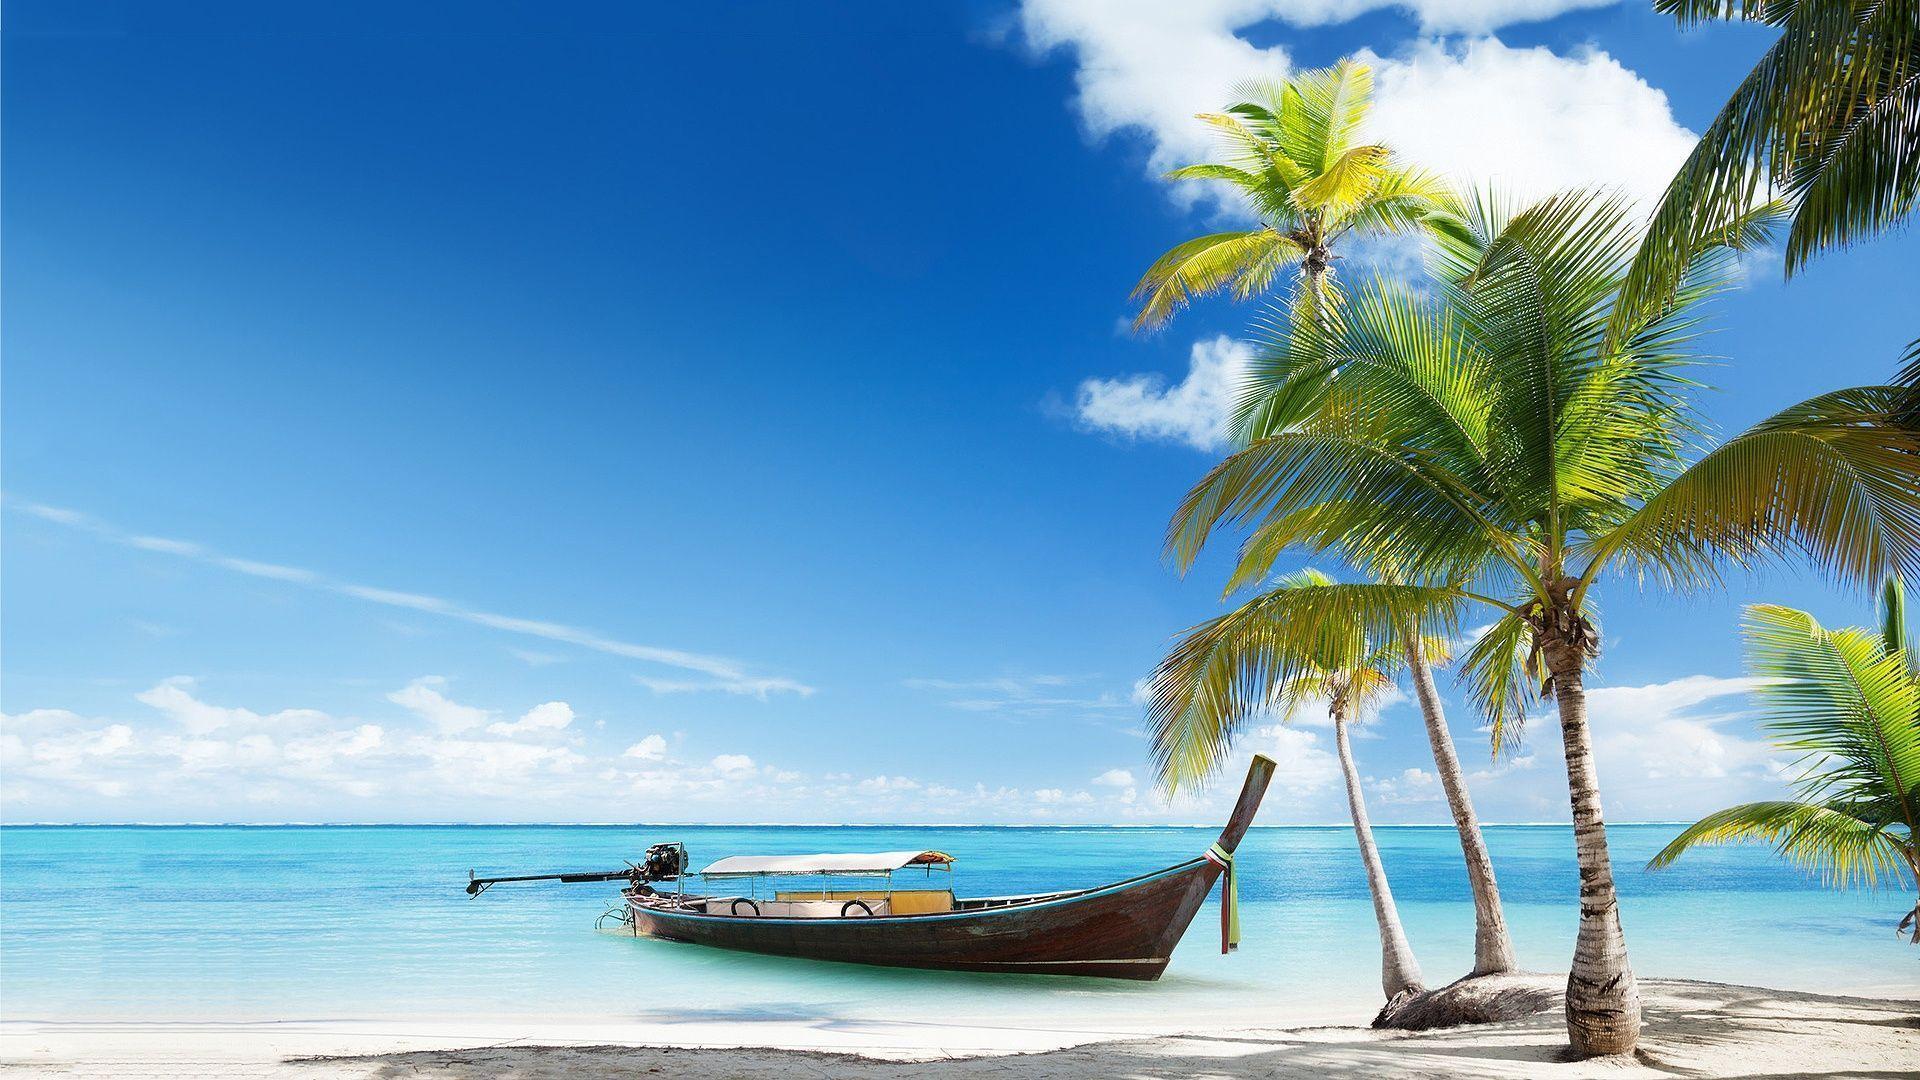 Boat Tropical Beach Wallpaper HD Picture Desktop Background Free